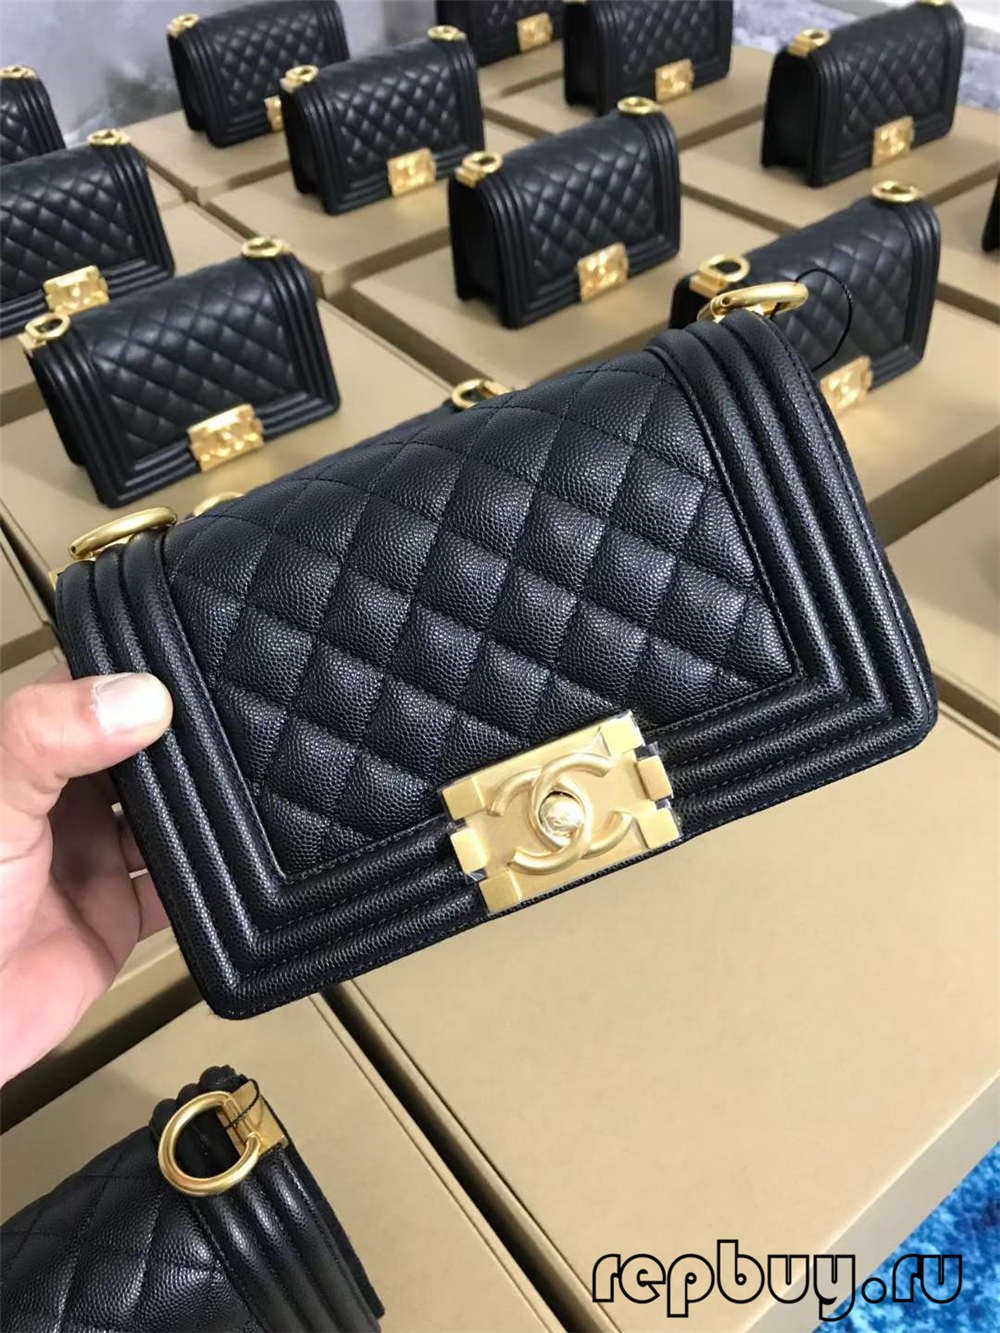 Chanel Leboy 4 top replica handbags gold buckle and silver buckle comparison (2022 Latest)-Best Quality Fake Louis Vuitton Bag Online Store, Replica designer bag ru